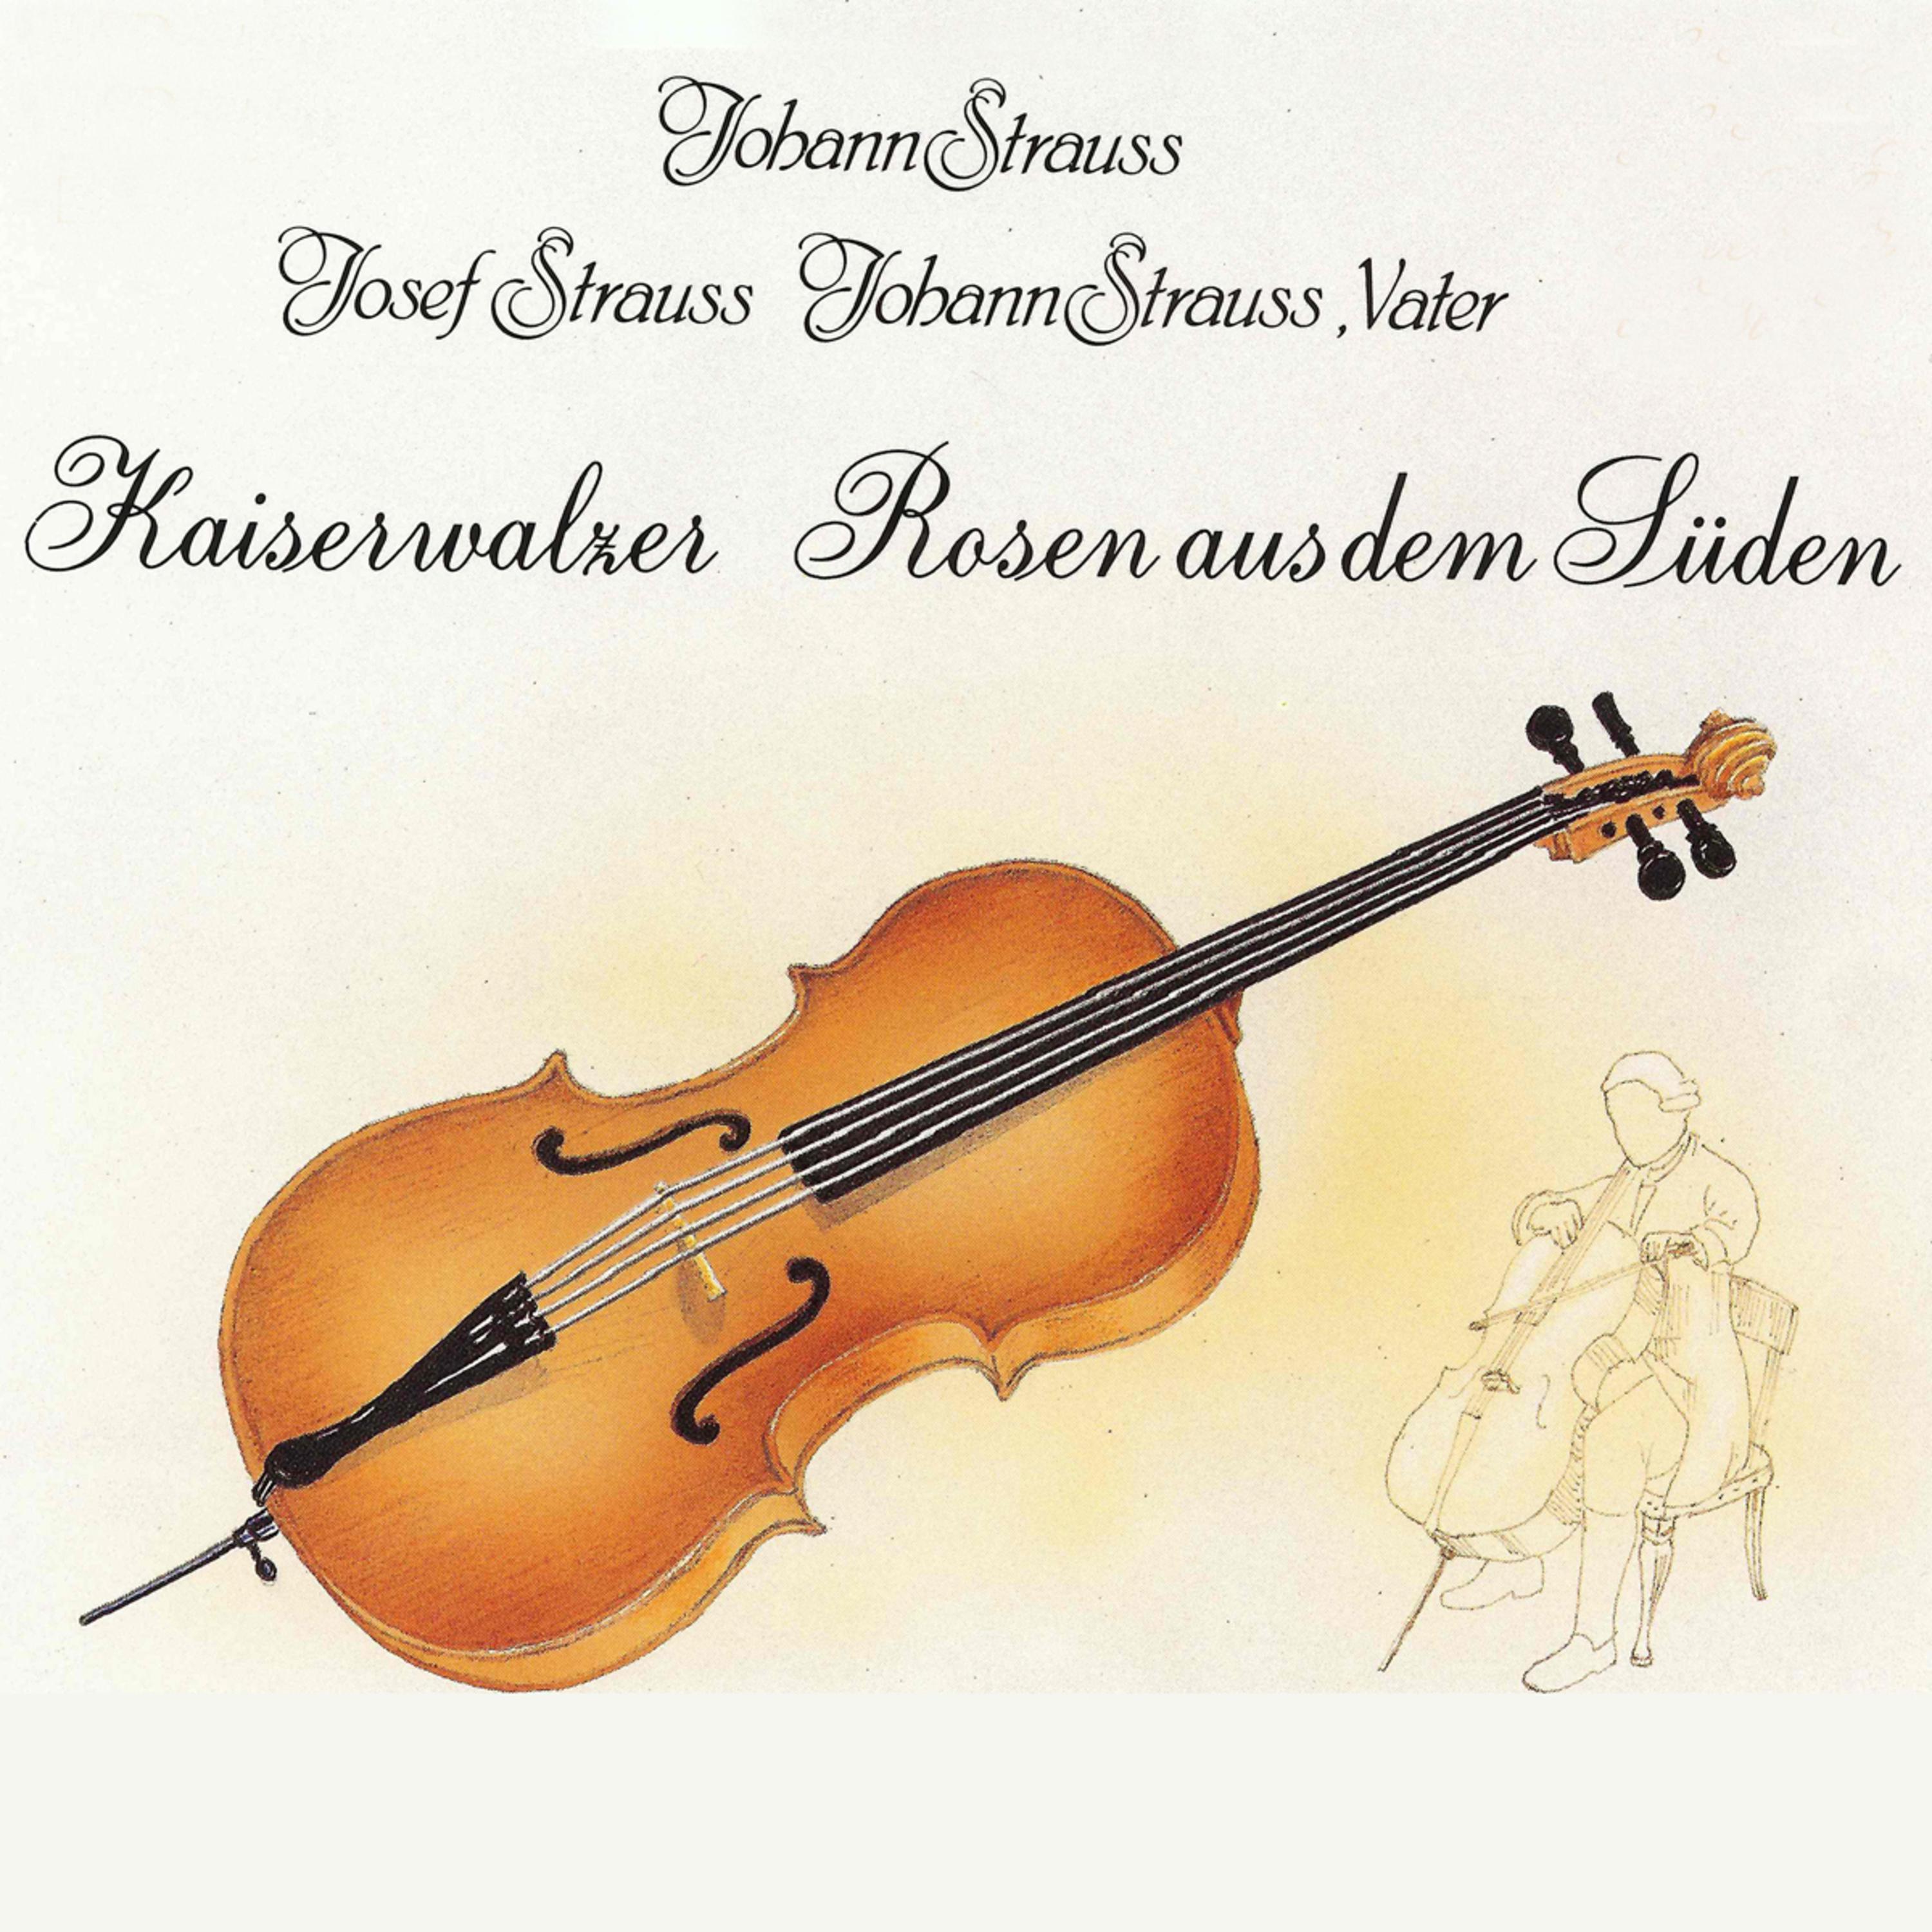 Johann Strauss: Kaiserwalzer, Rosen aus dem Sü den